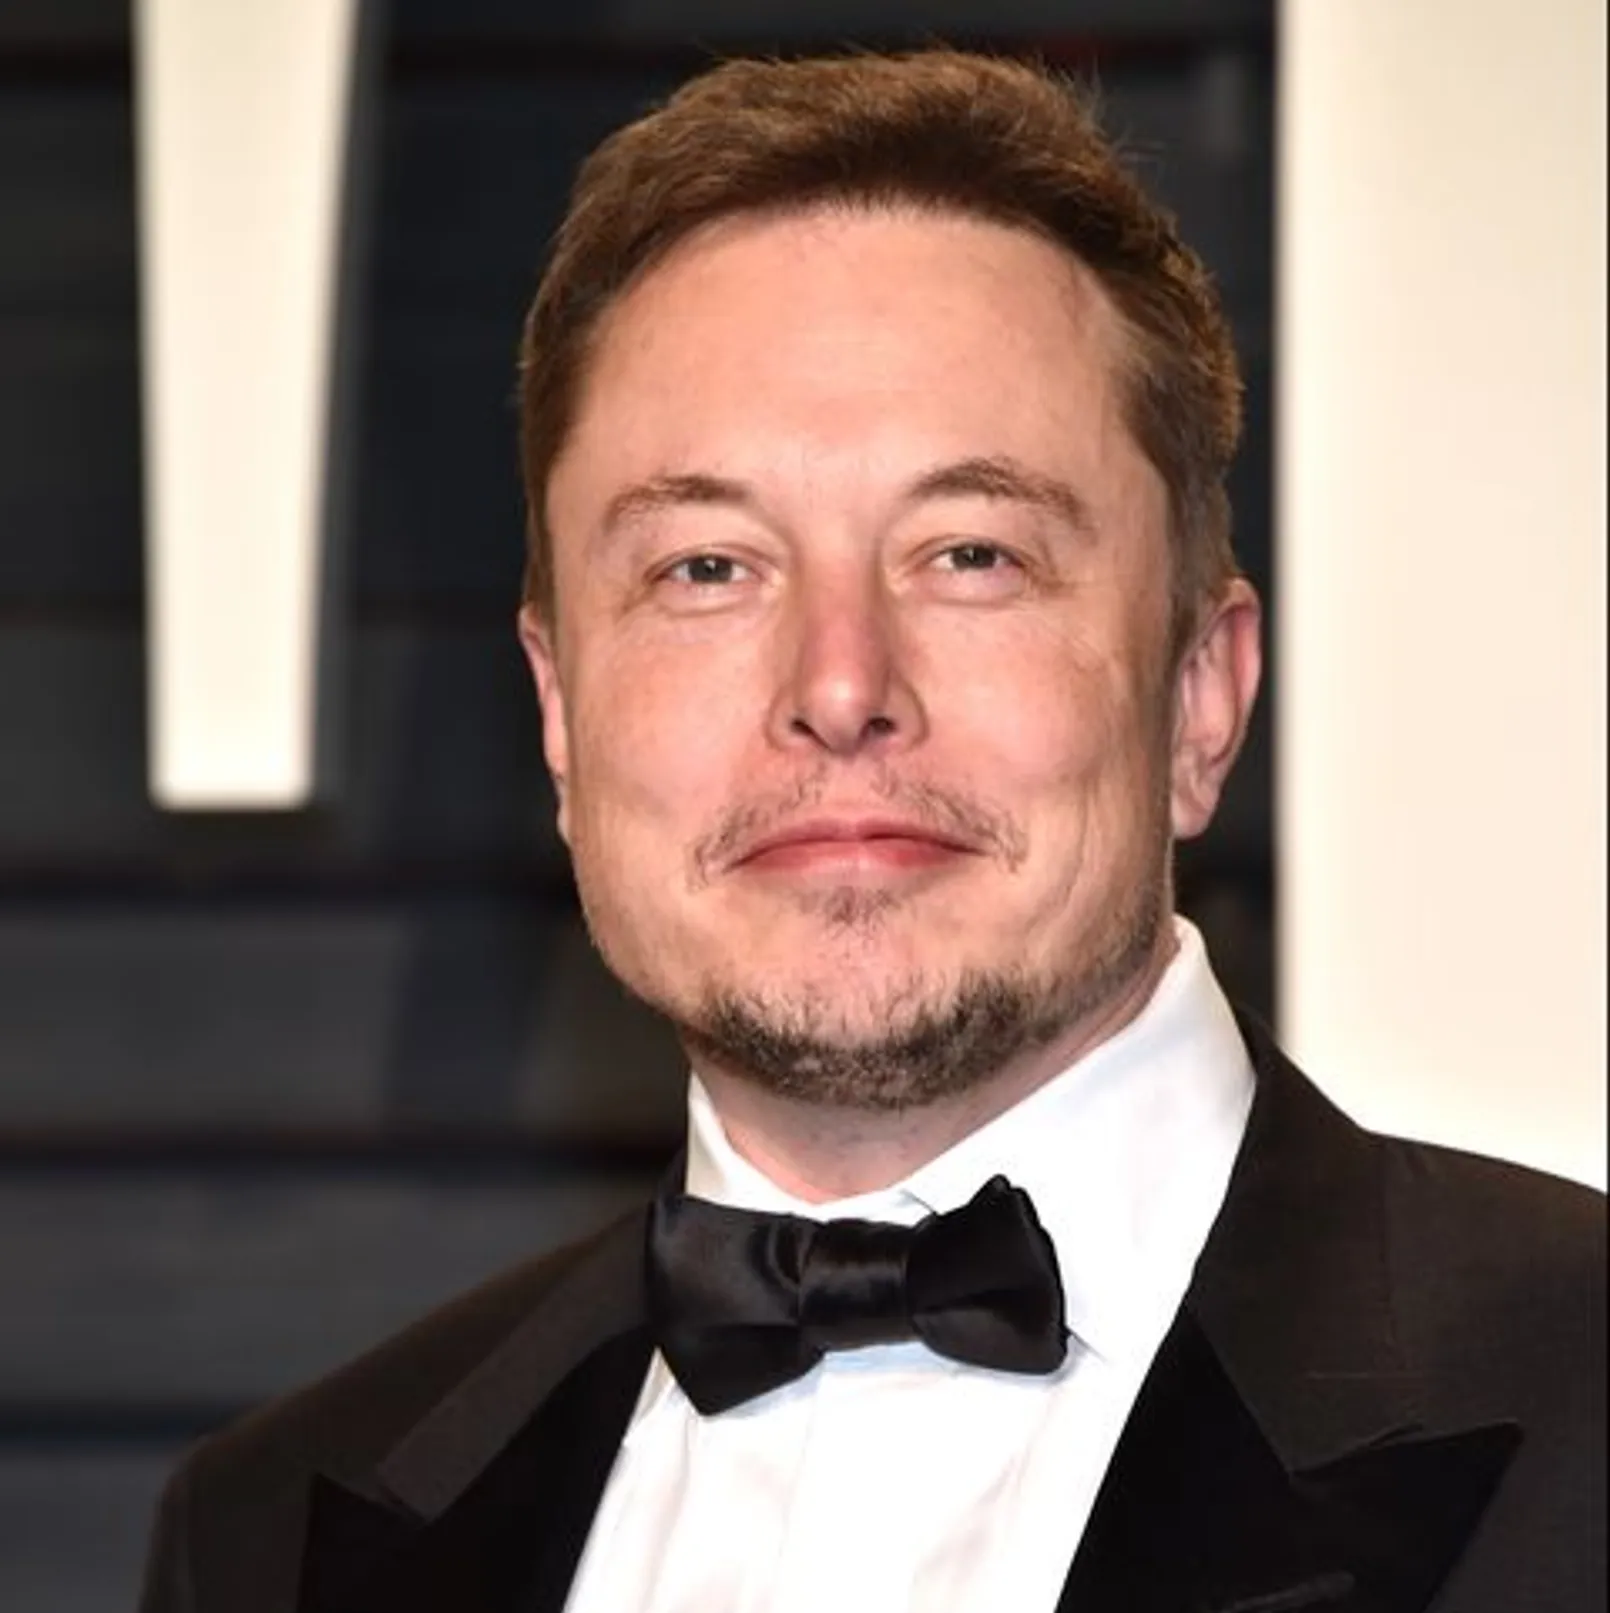 Spacex Ceo Elon Musk Attends the 2017 Vanity Fair Oscar News Photo 1574694599.jpg